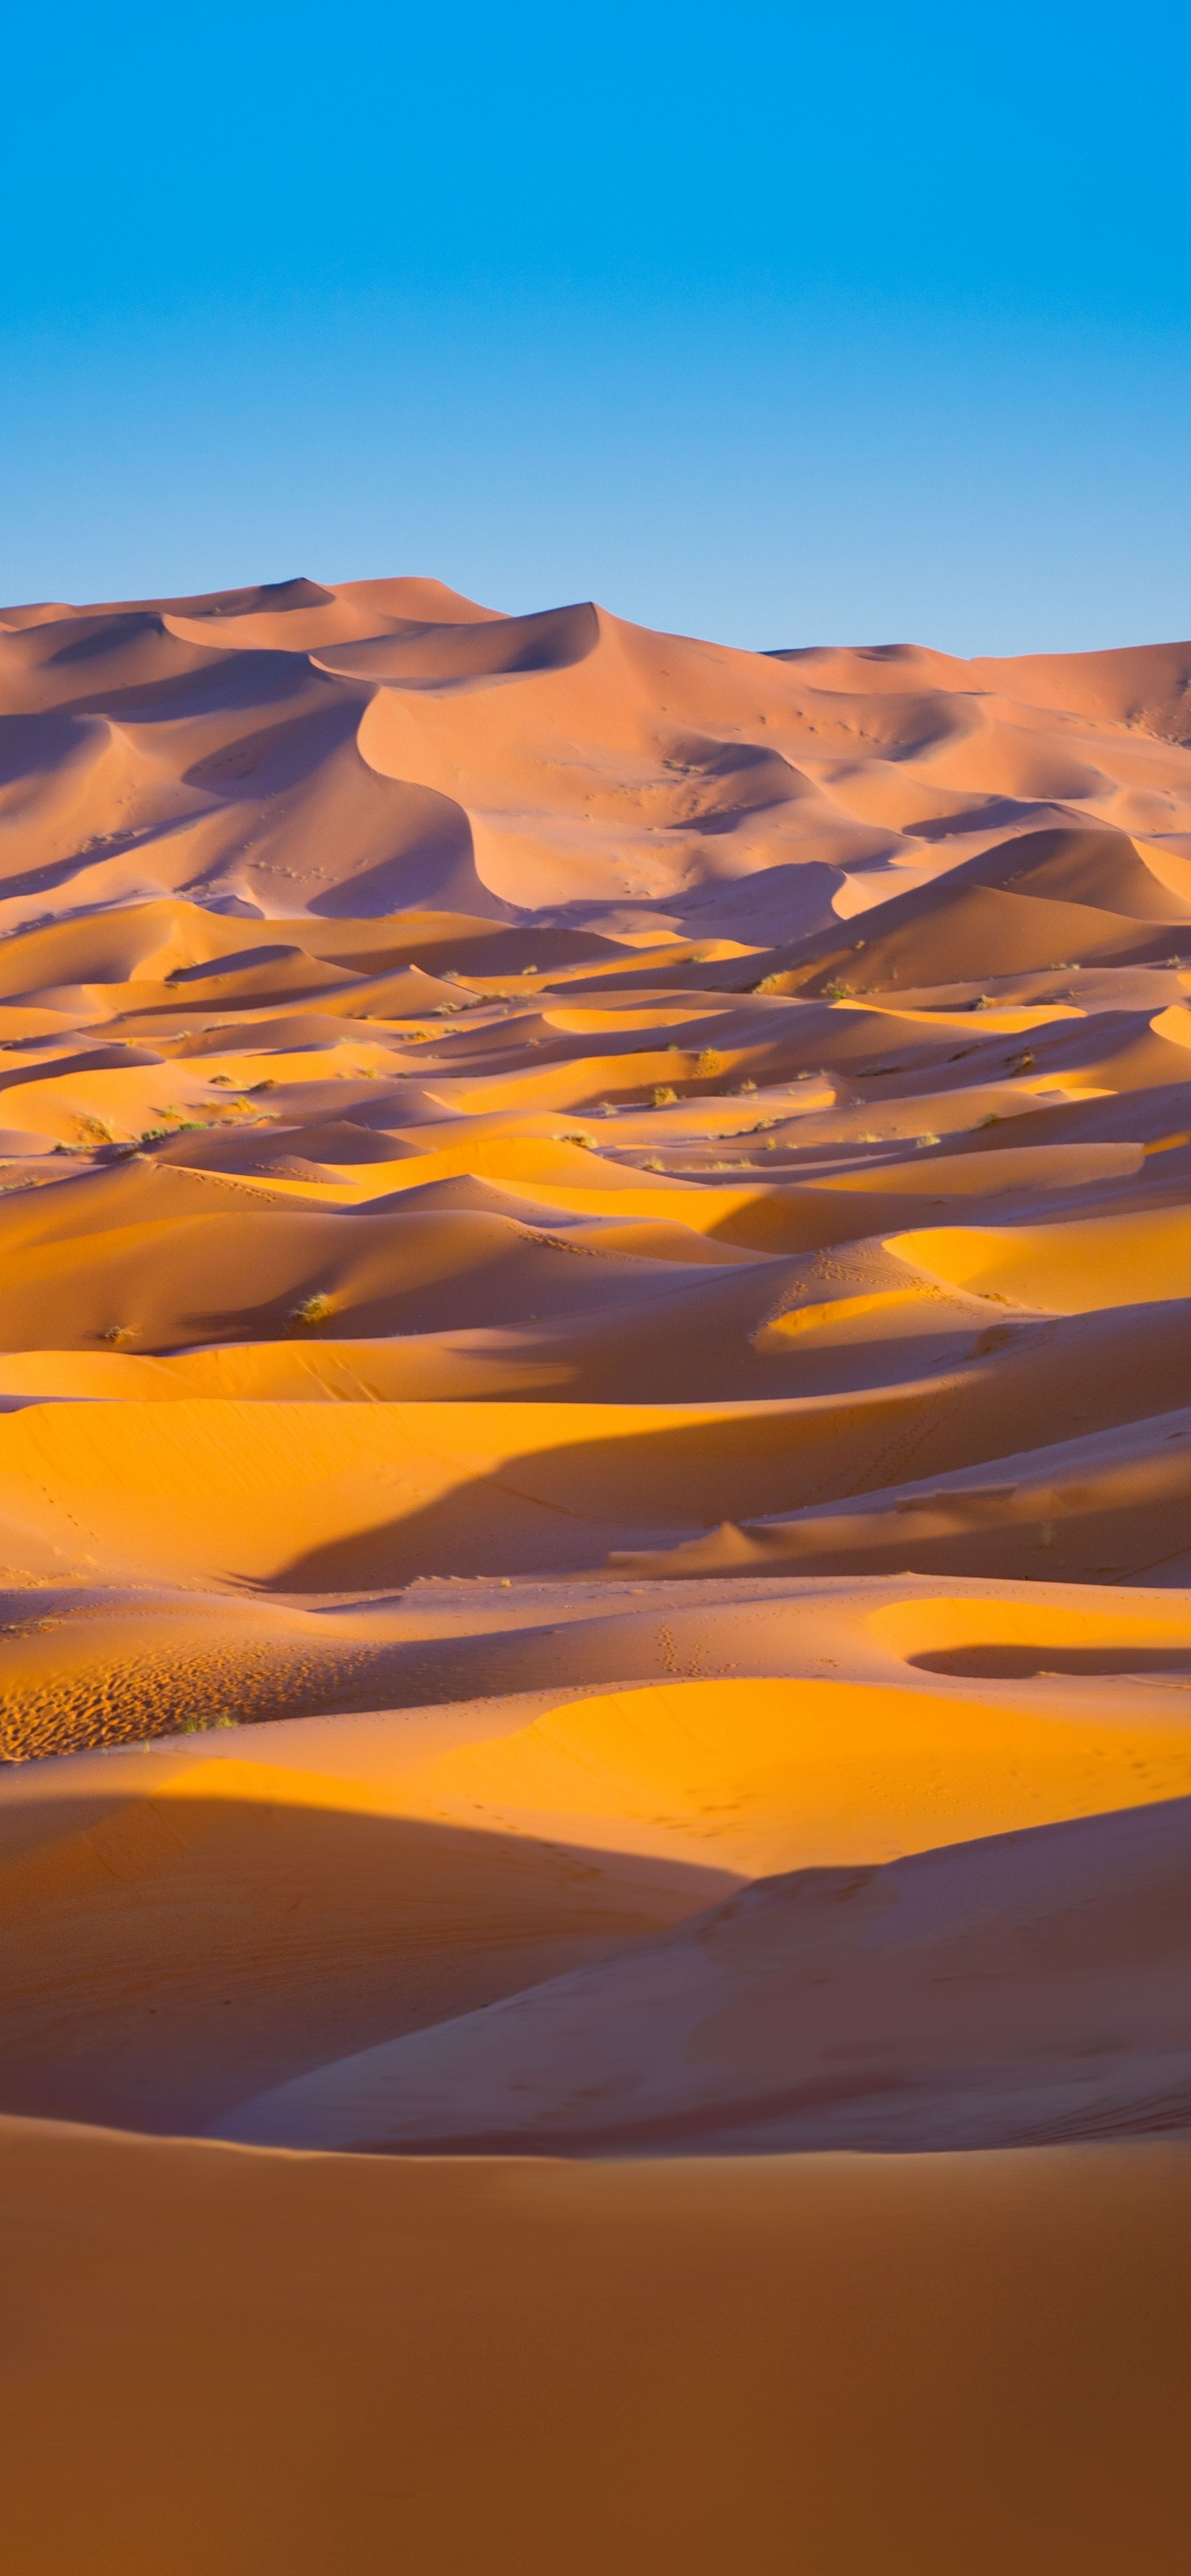 Desert Aesthetic Wallpapers  Cool Desert Wallpapers for iPhone